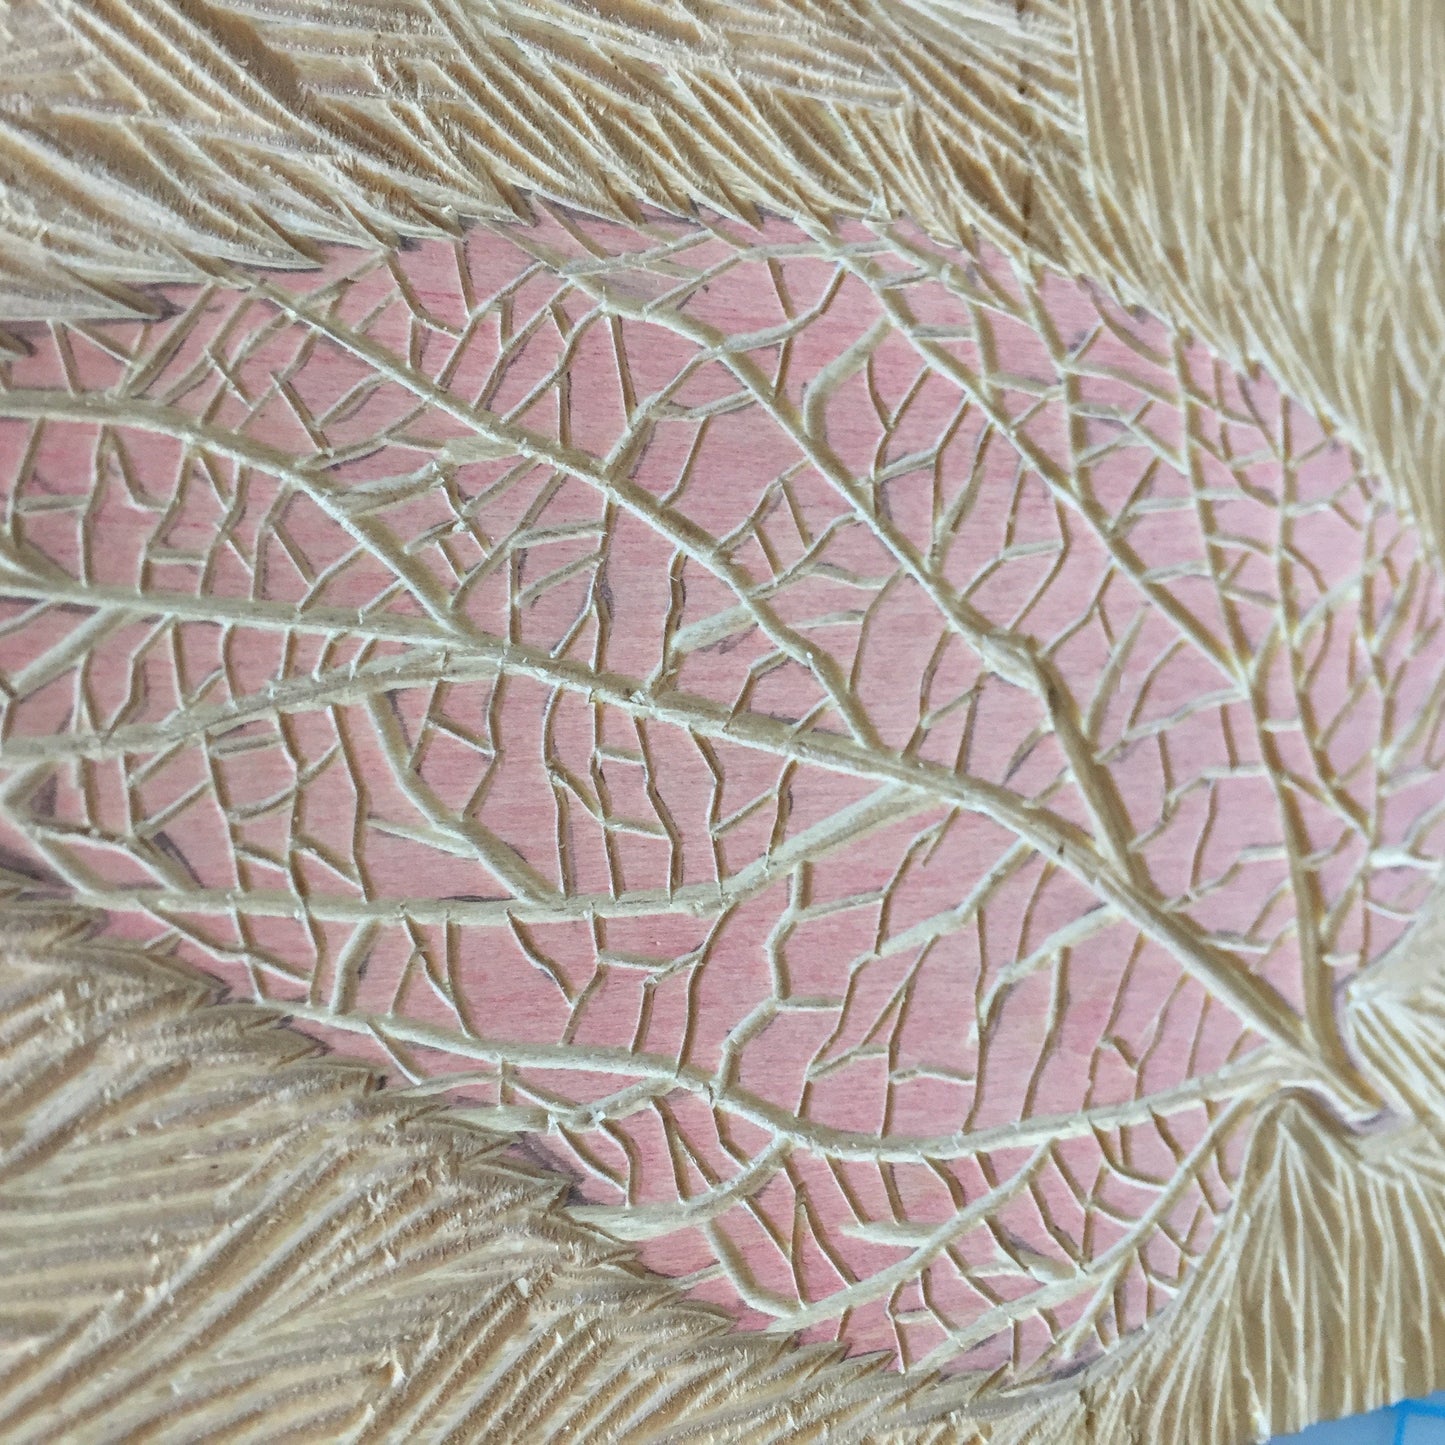 Hackberry leaf - woodblock print (9x12”)